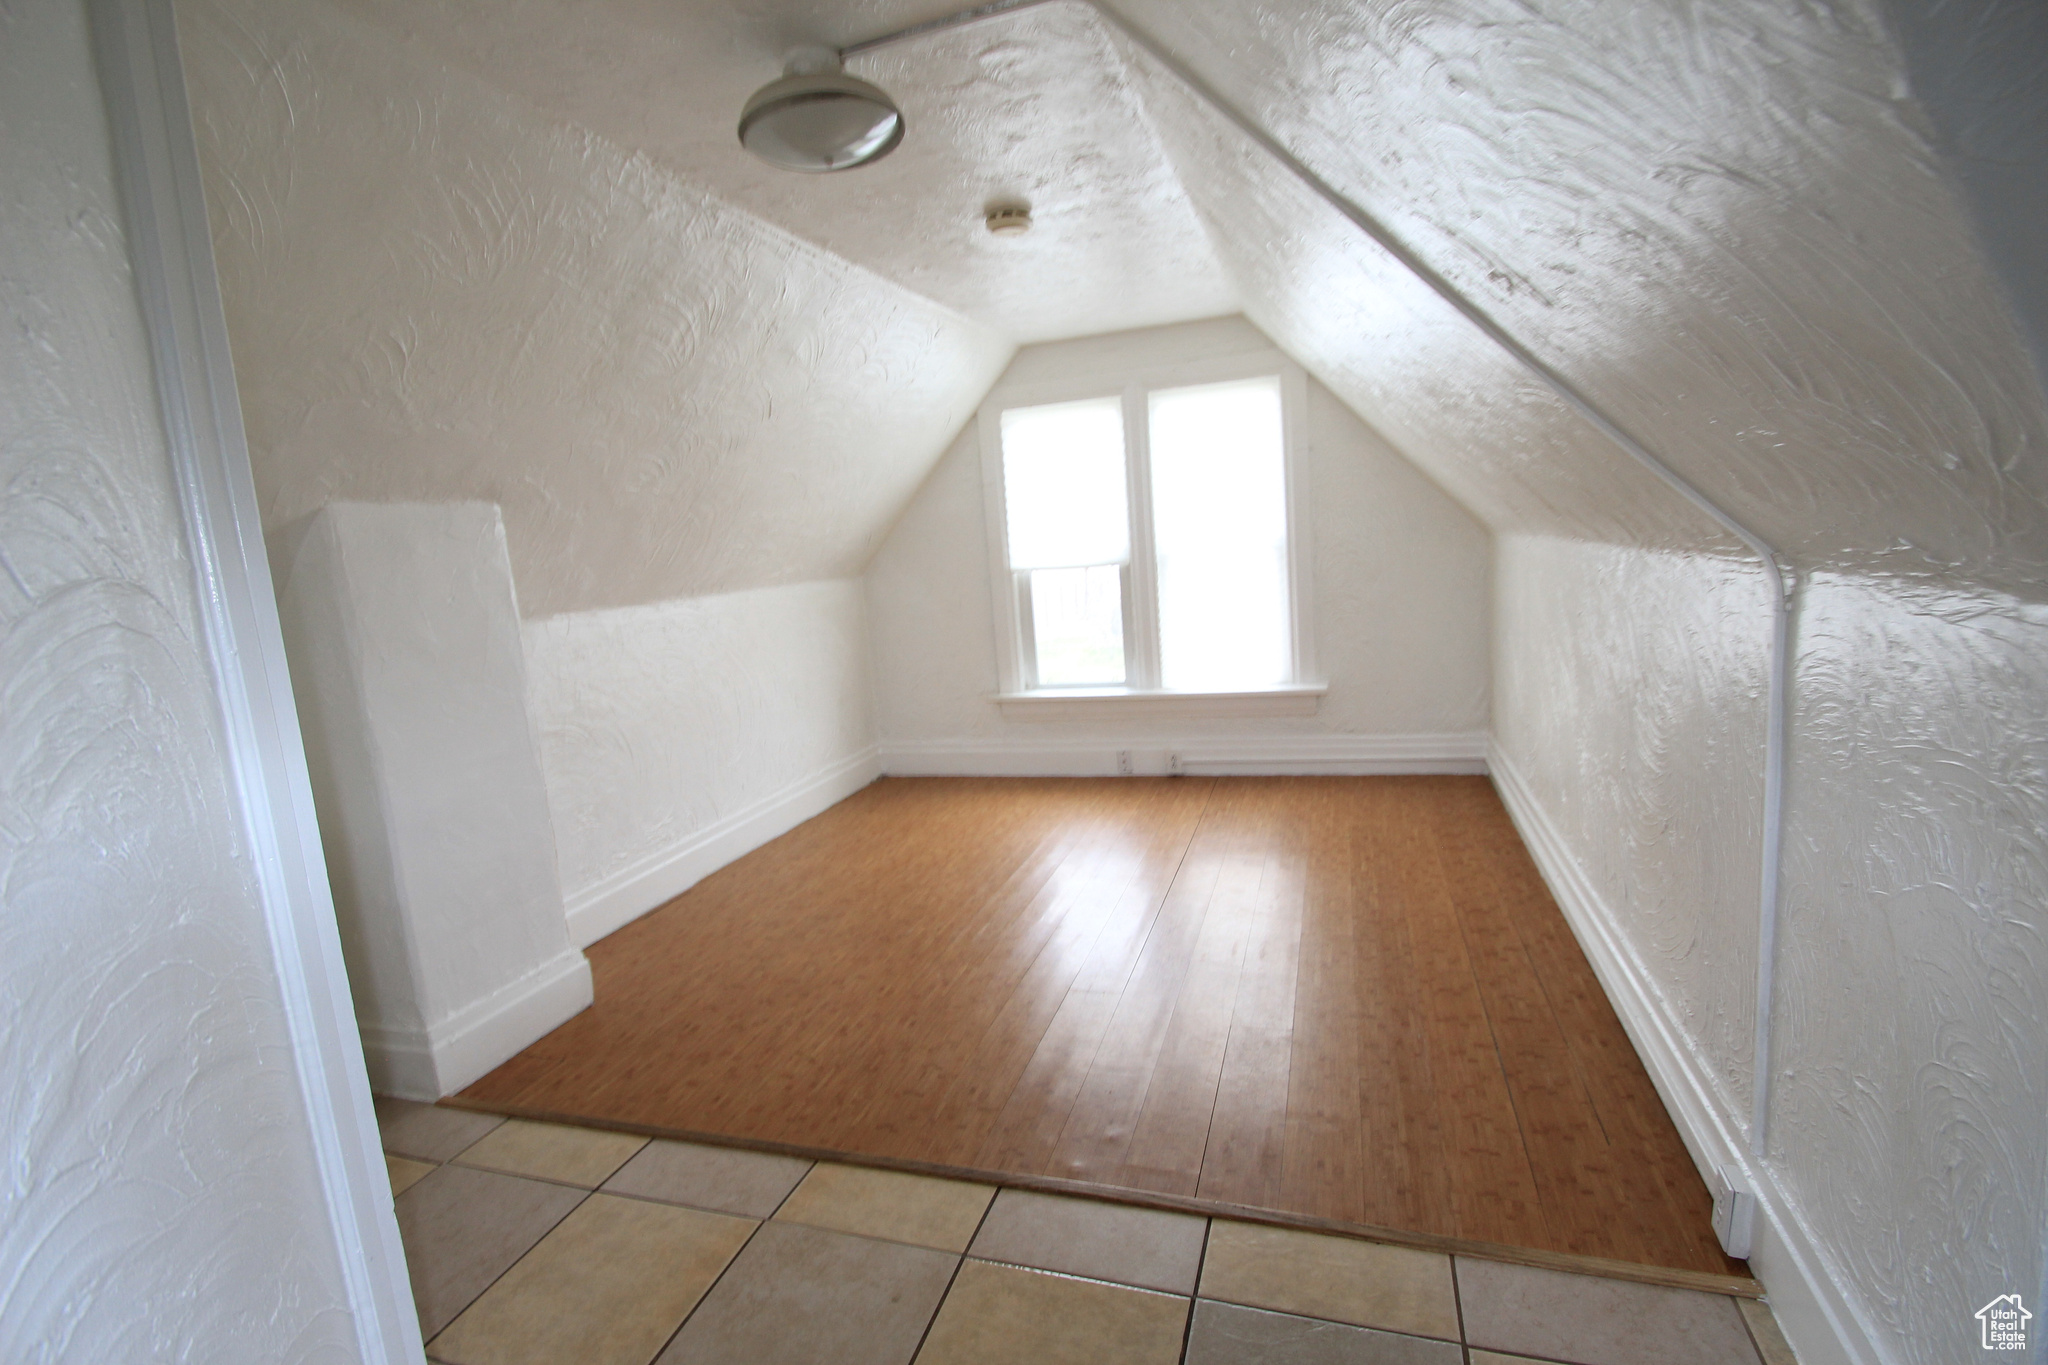 Bonus room with vaulted ceiling and light wood-type flooring